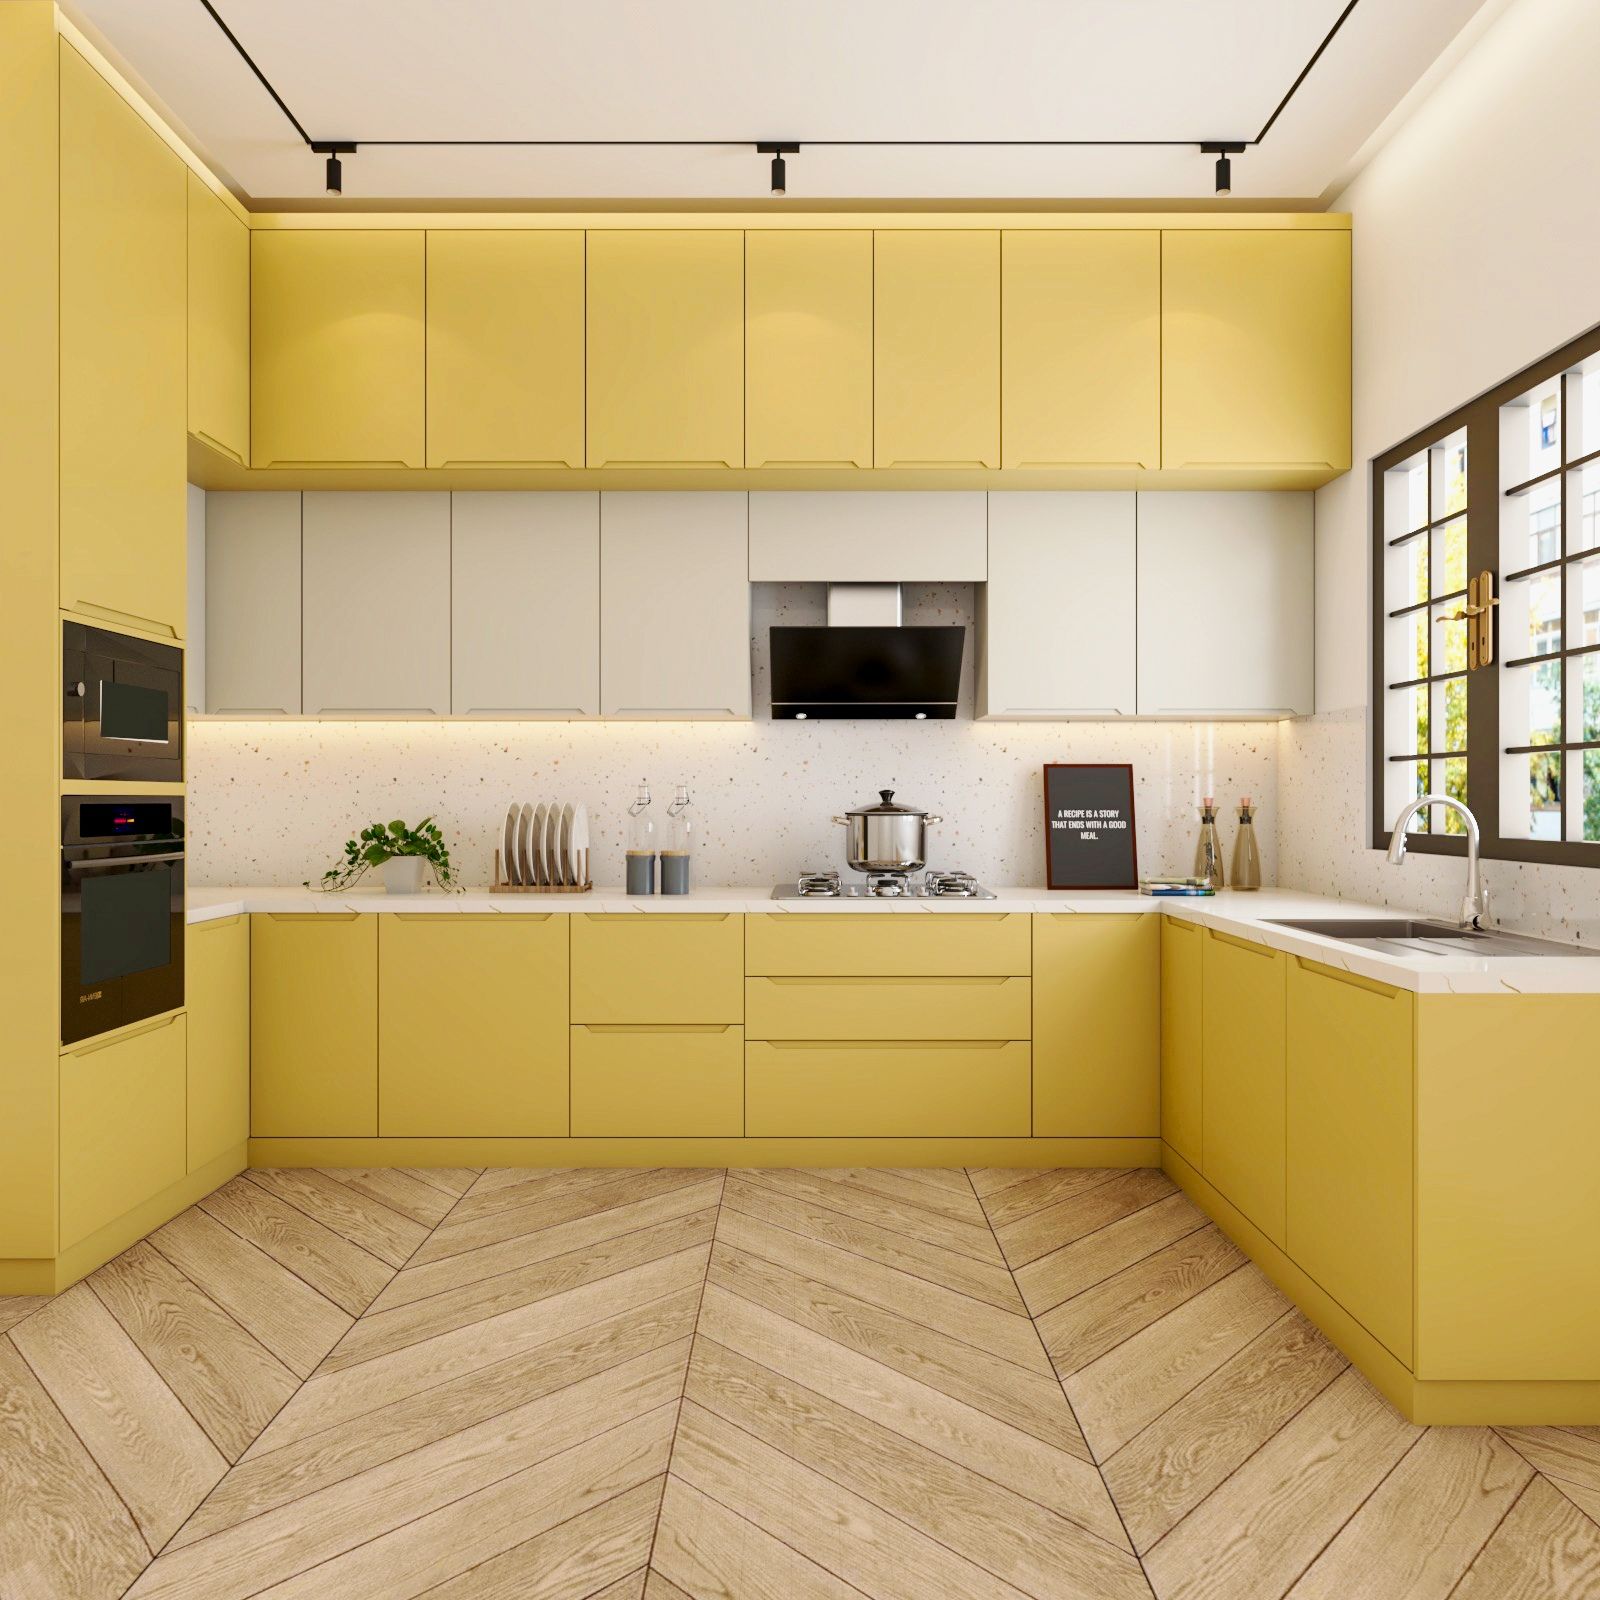 Modern Modular U-Shaped Kitchen Design With Yellow And White Kitchen Cabinets